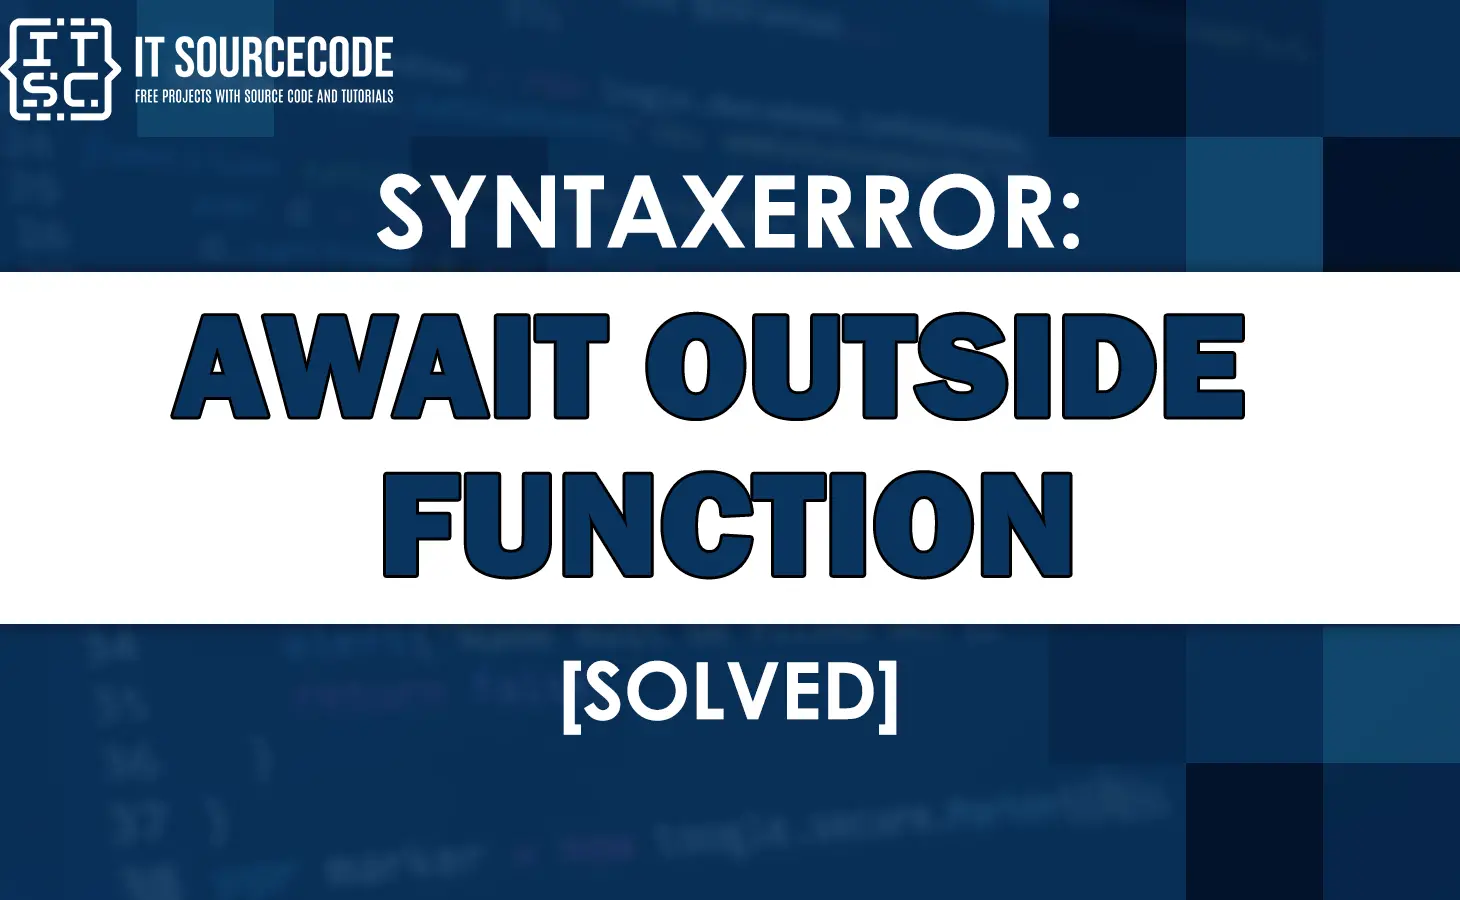 Syntaxerror: await outside function